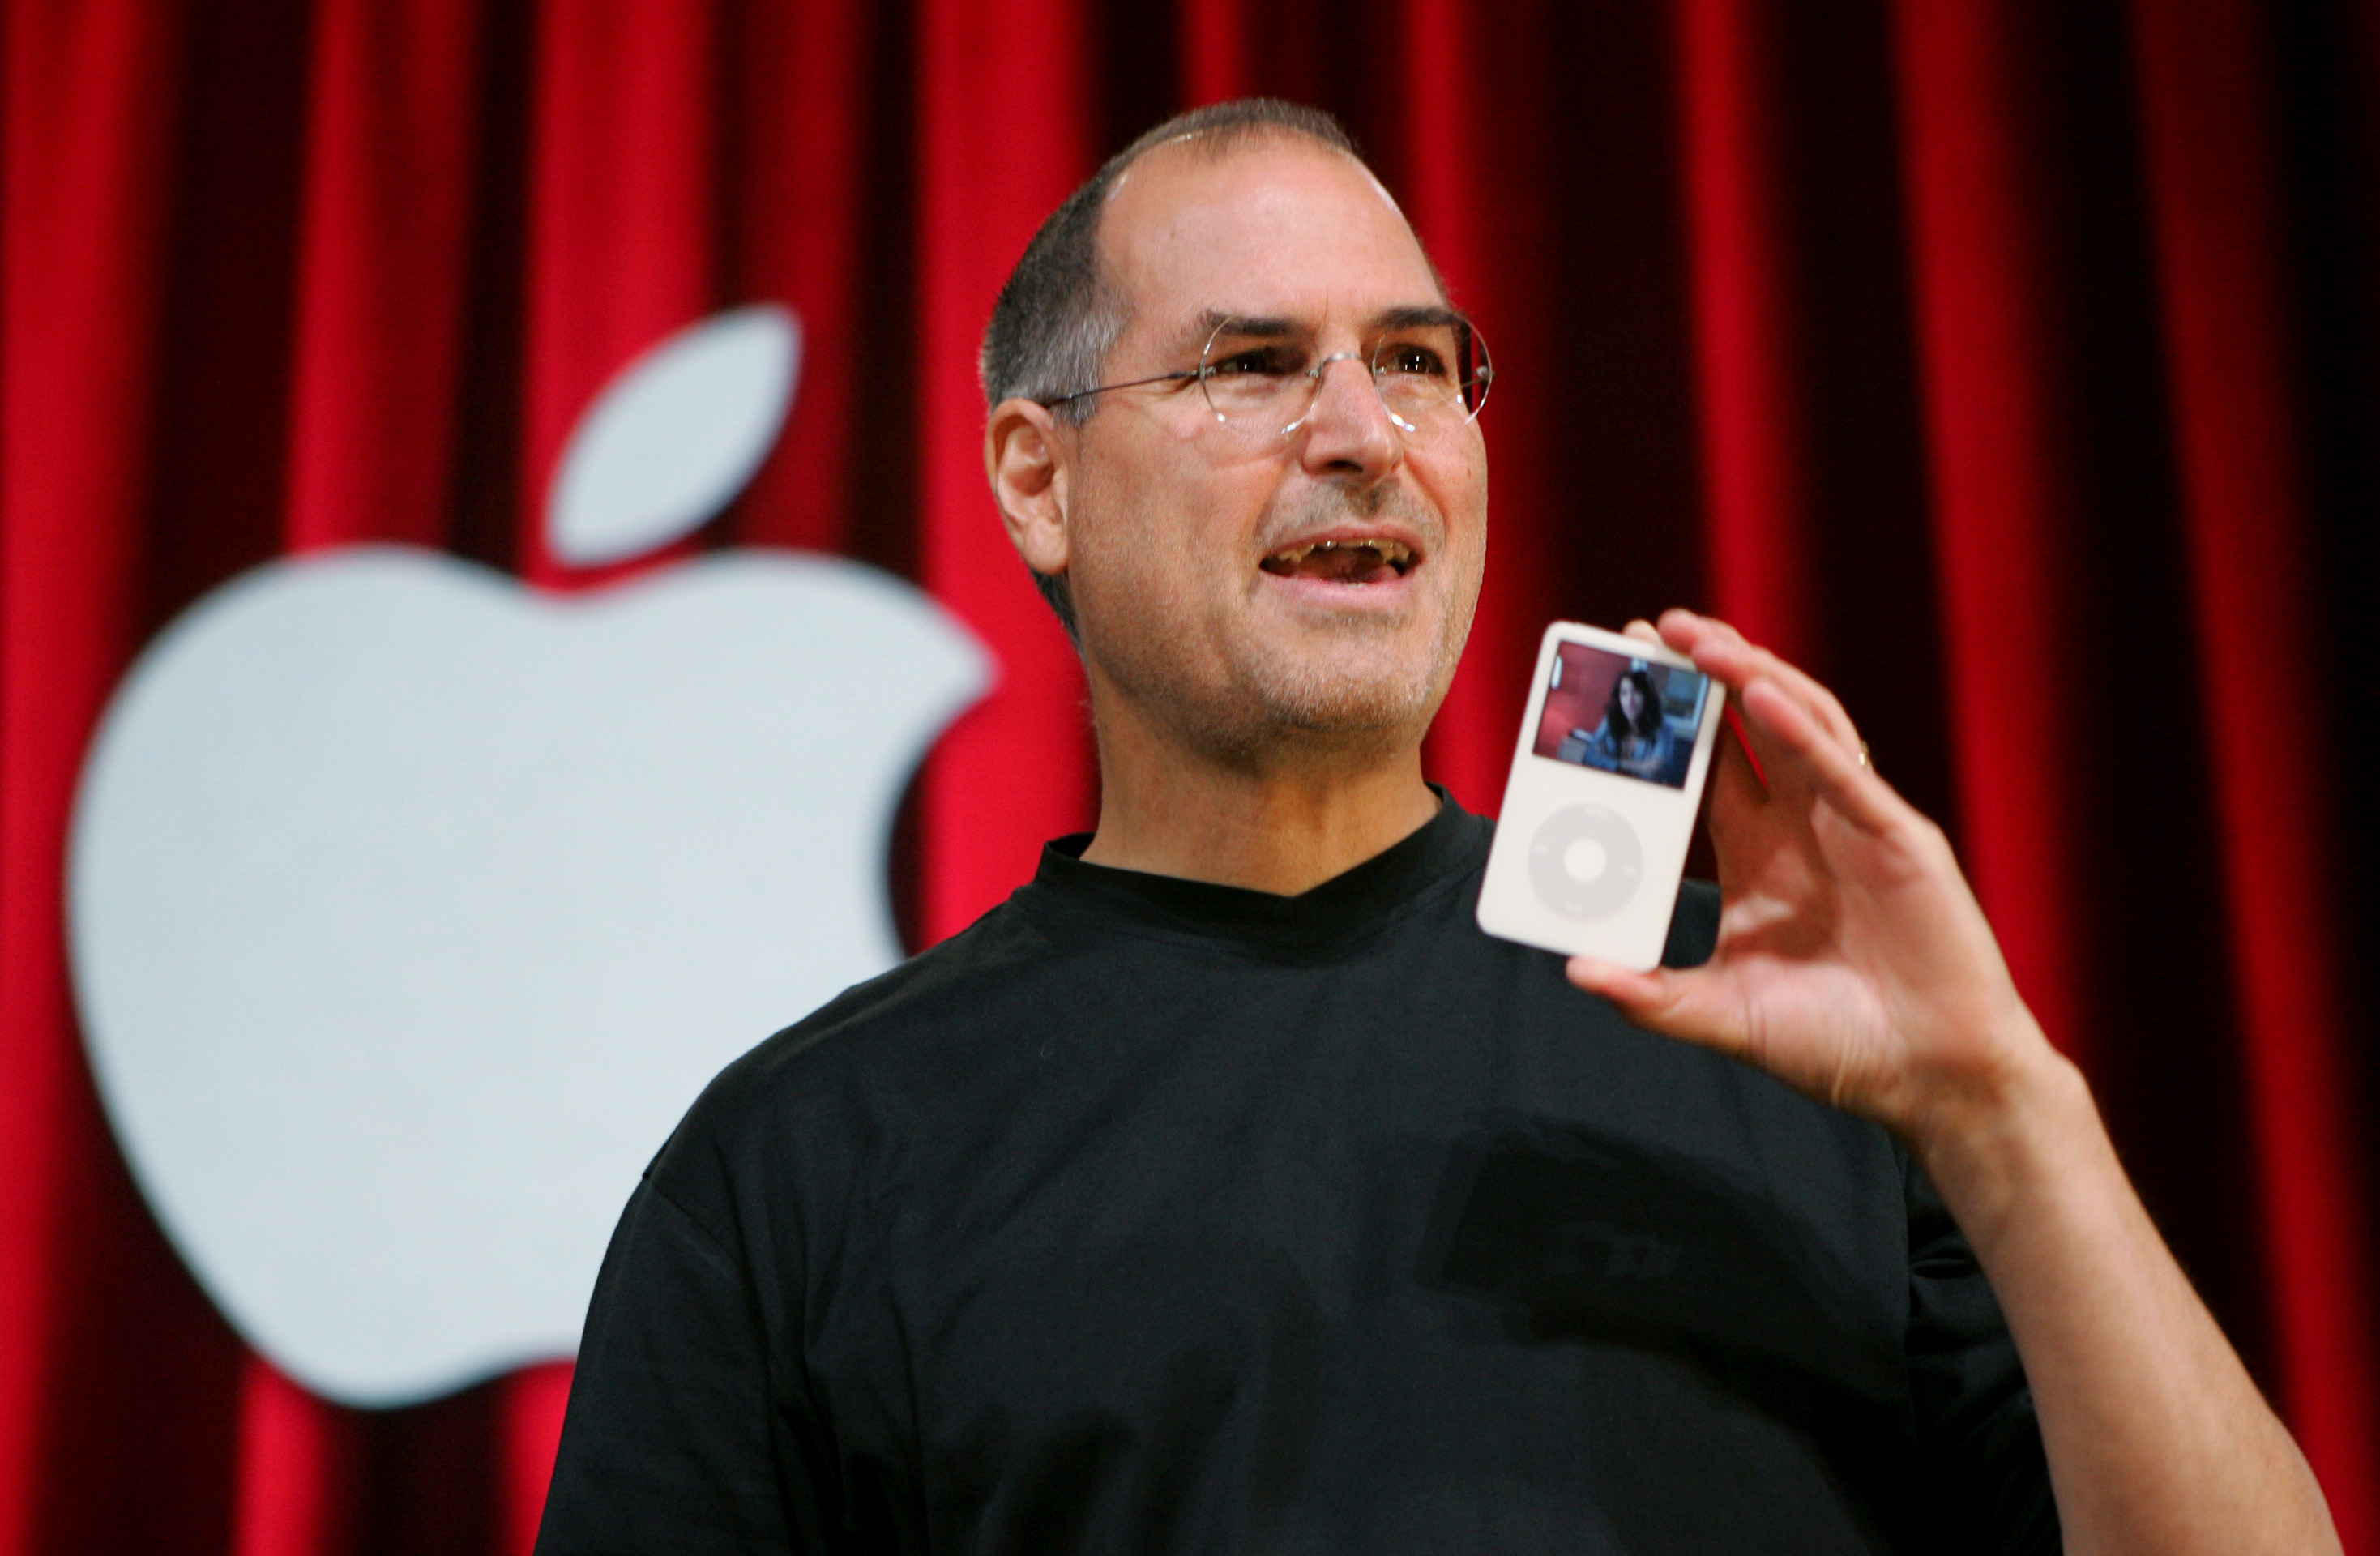 The late Apple CEO Steve Jobs holds up an iPod during an event in San Jose, Calif. on Oct. 12, 2005. (Paul Sakuma&mdash;AP)